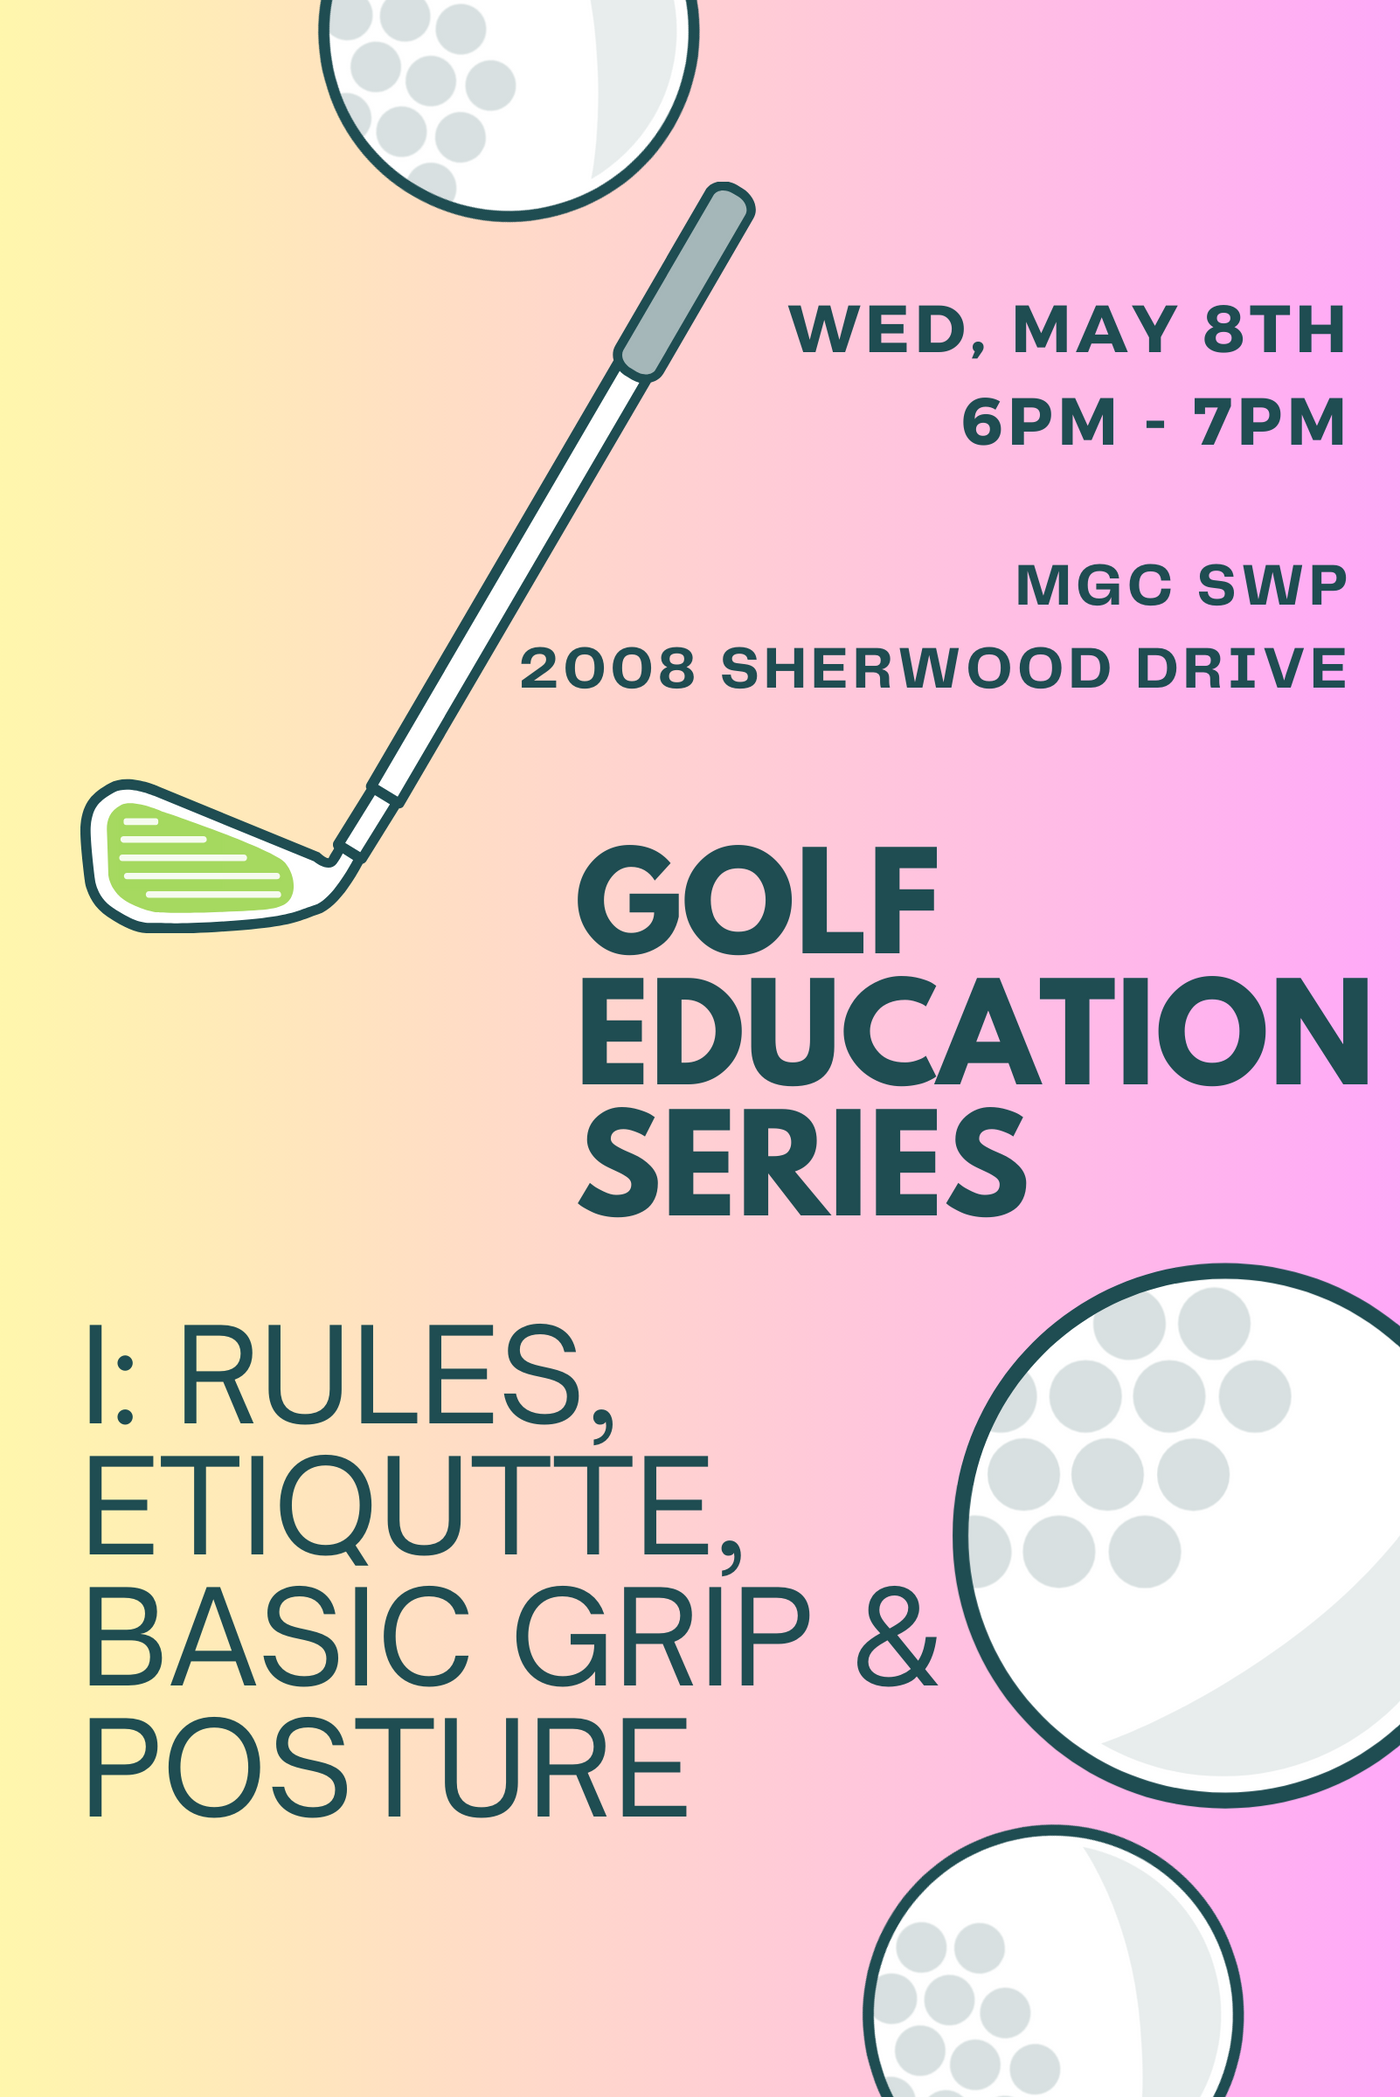 Golf Education Series - #1 BEGINNER Rules & Etique | Grip & Posture